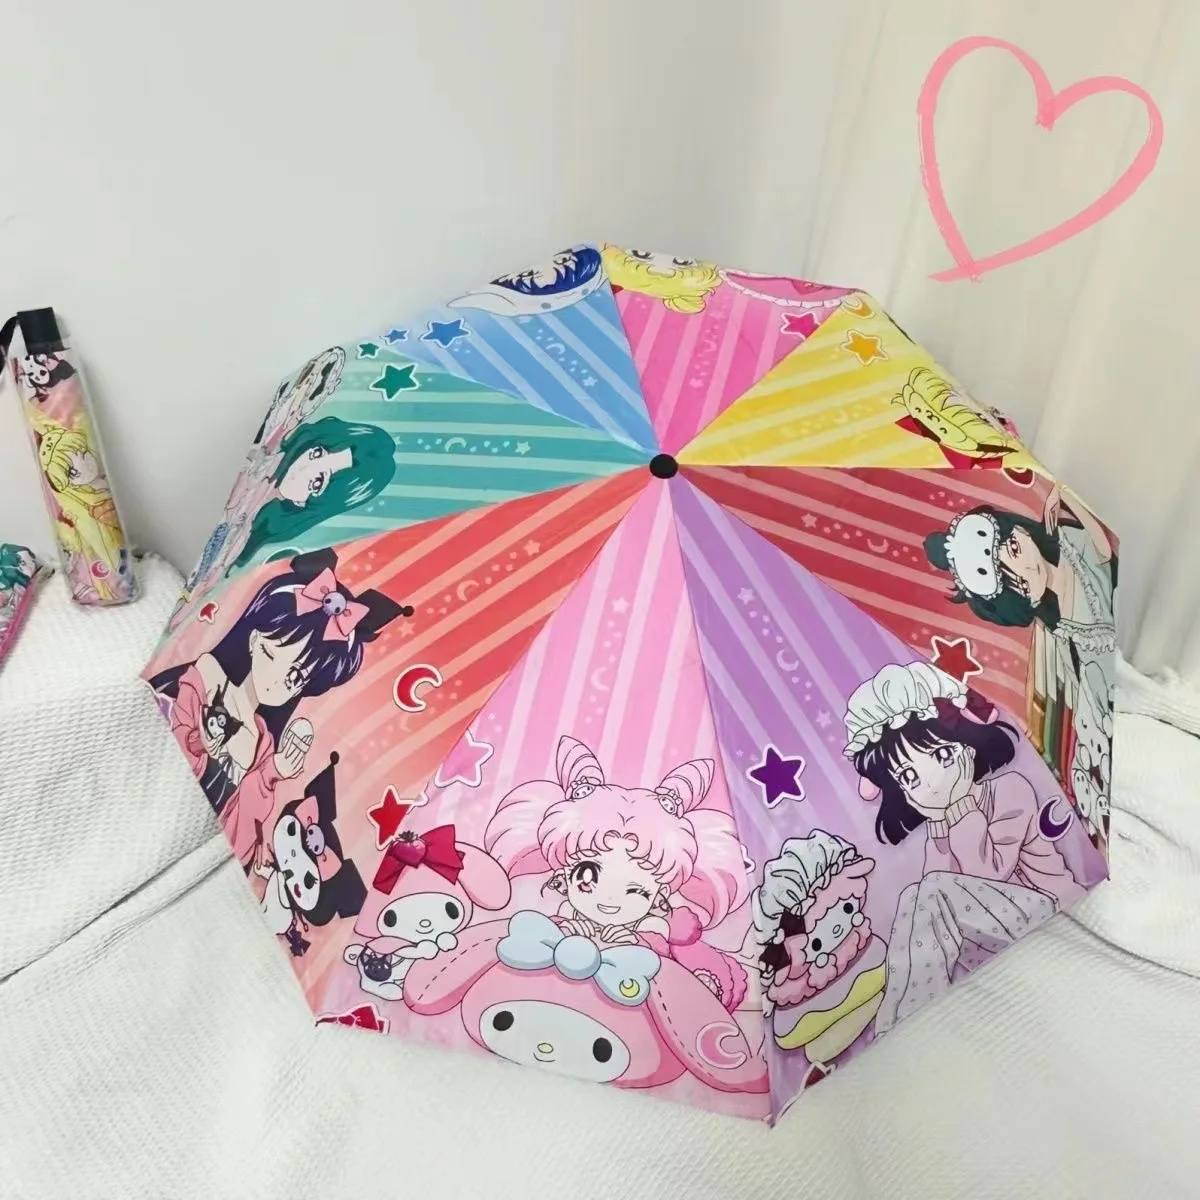 Anime Sailor Moon Automatic Sun Umbrella Women's Sun Protection UV Protection Rain and Sunshine Dual Use Umbrella Gift